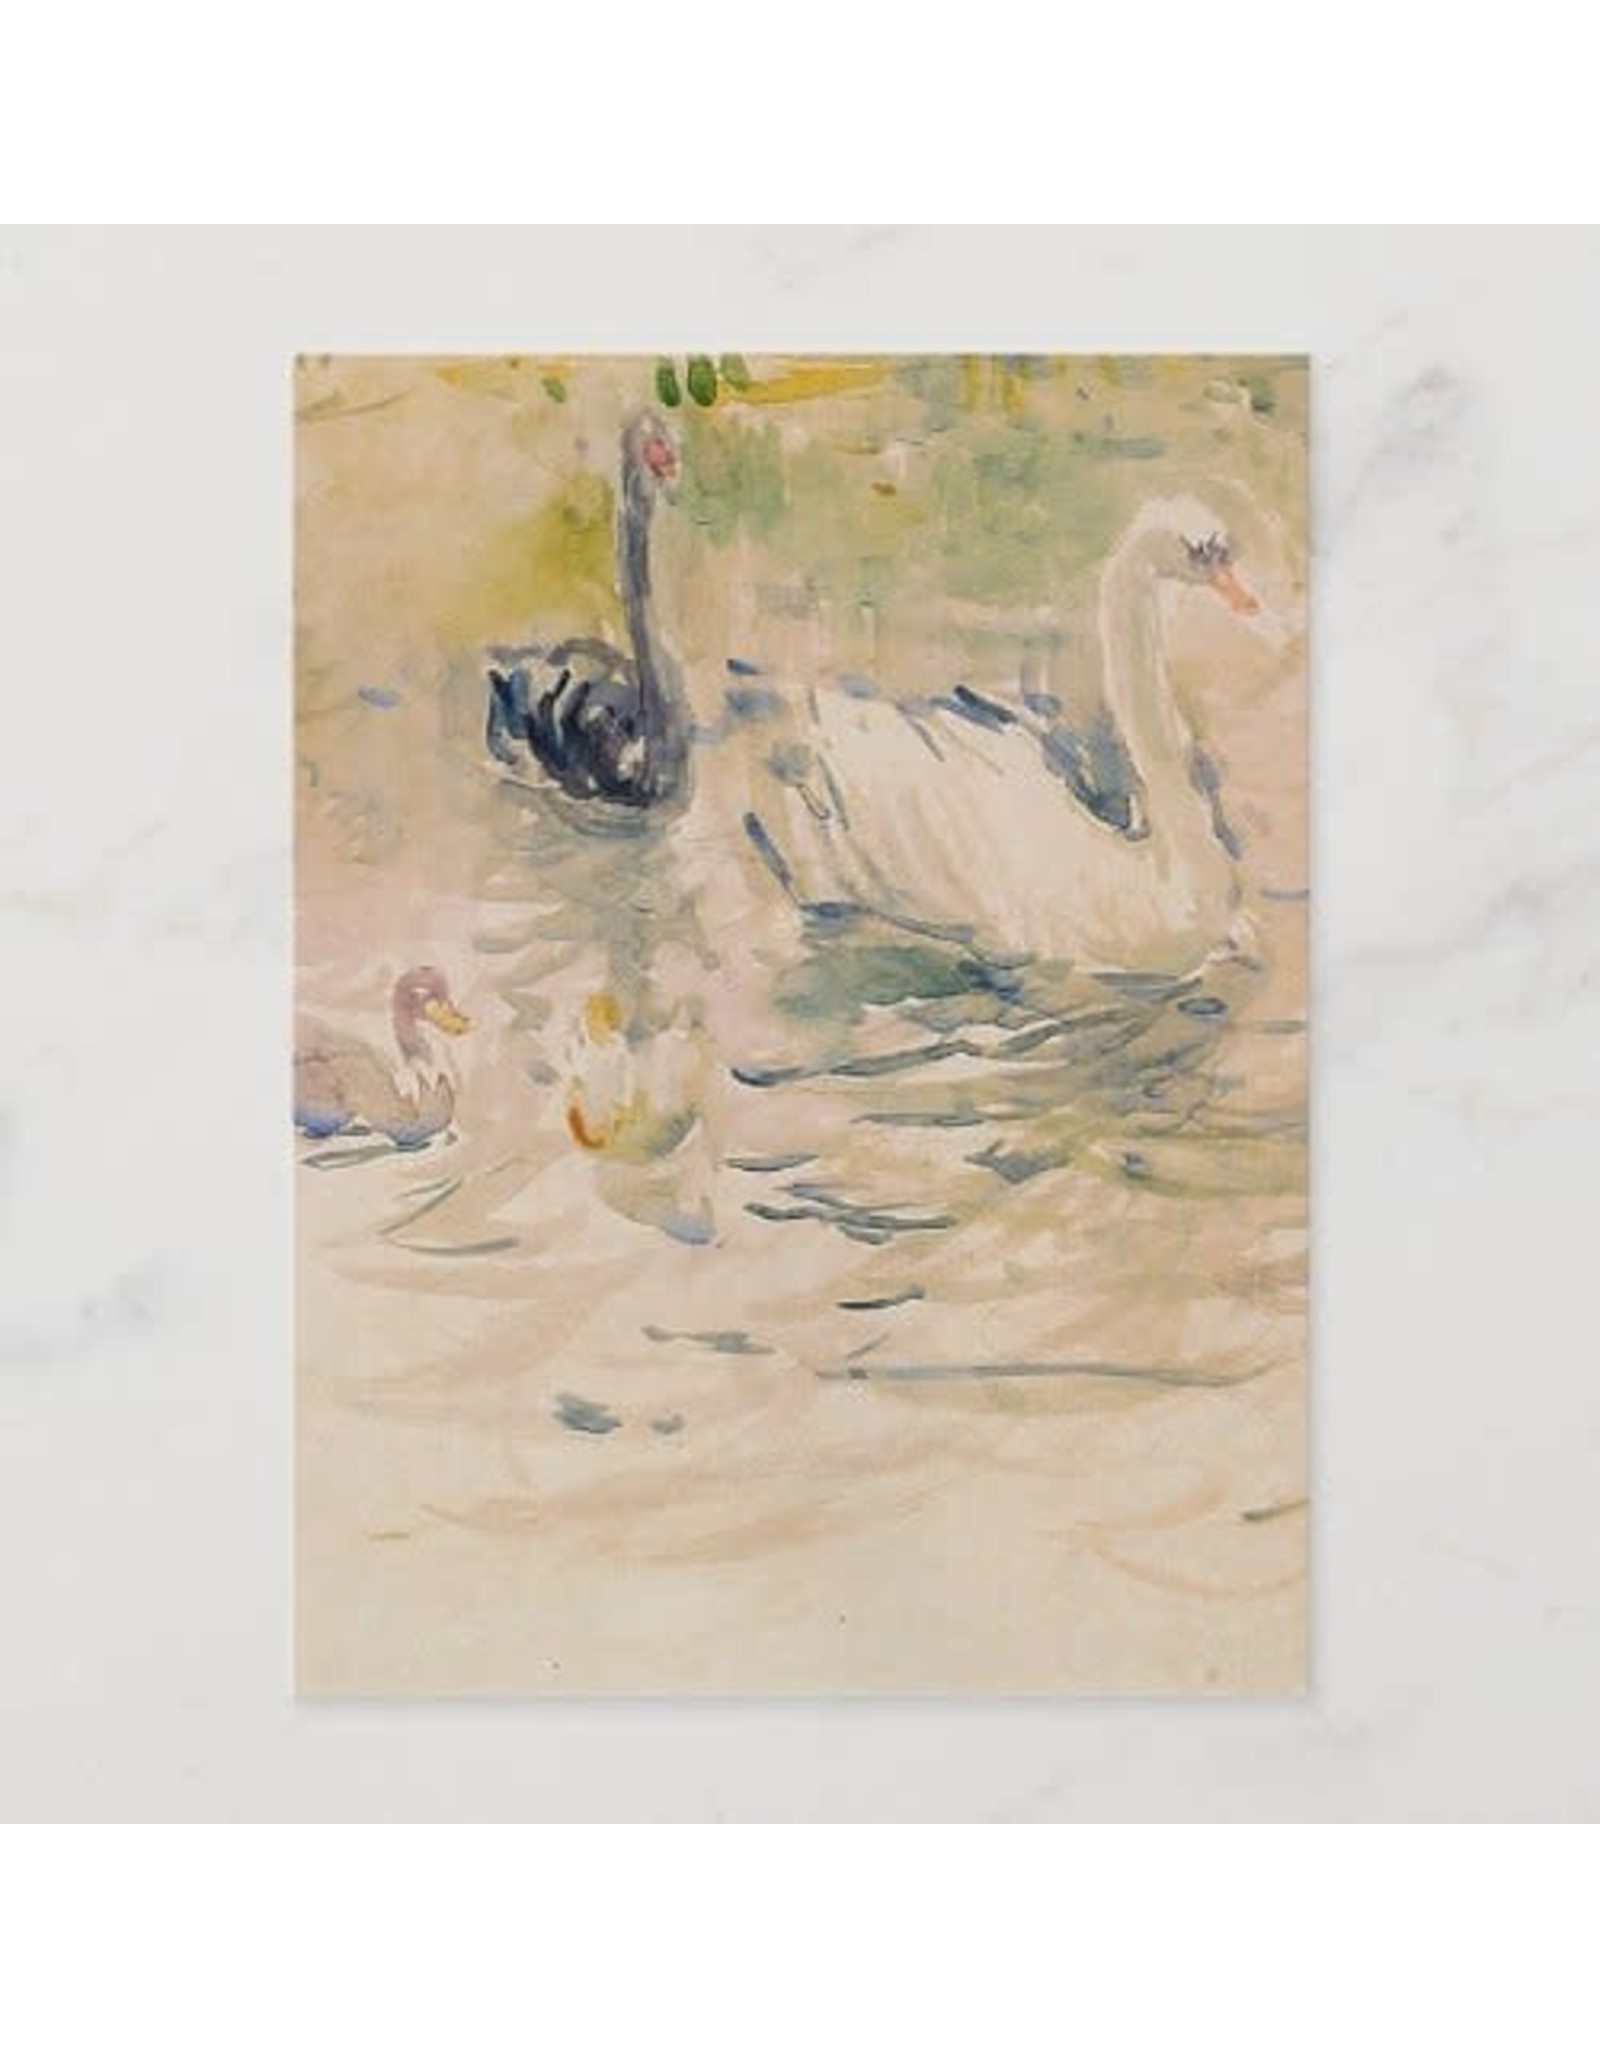 Swans Postcard